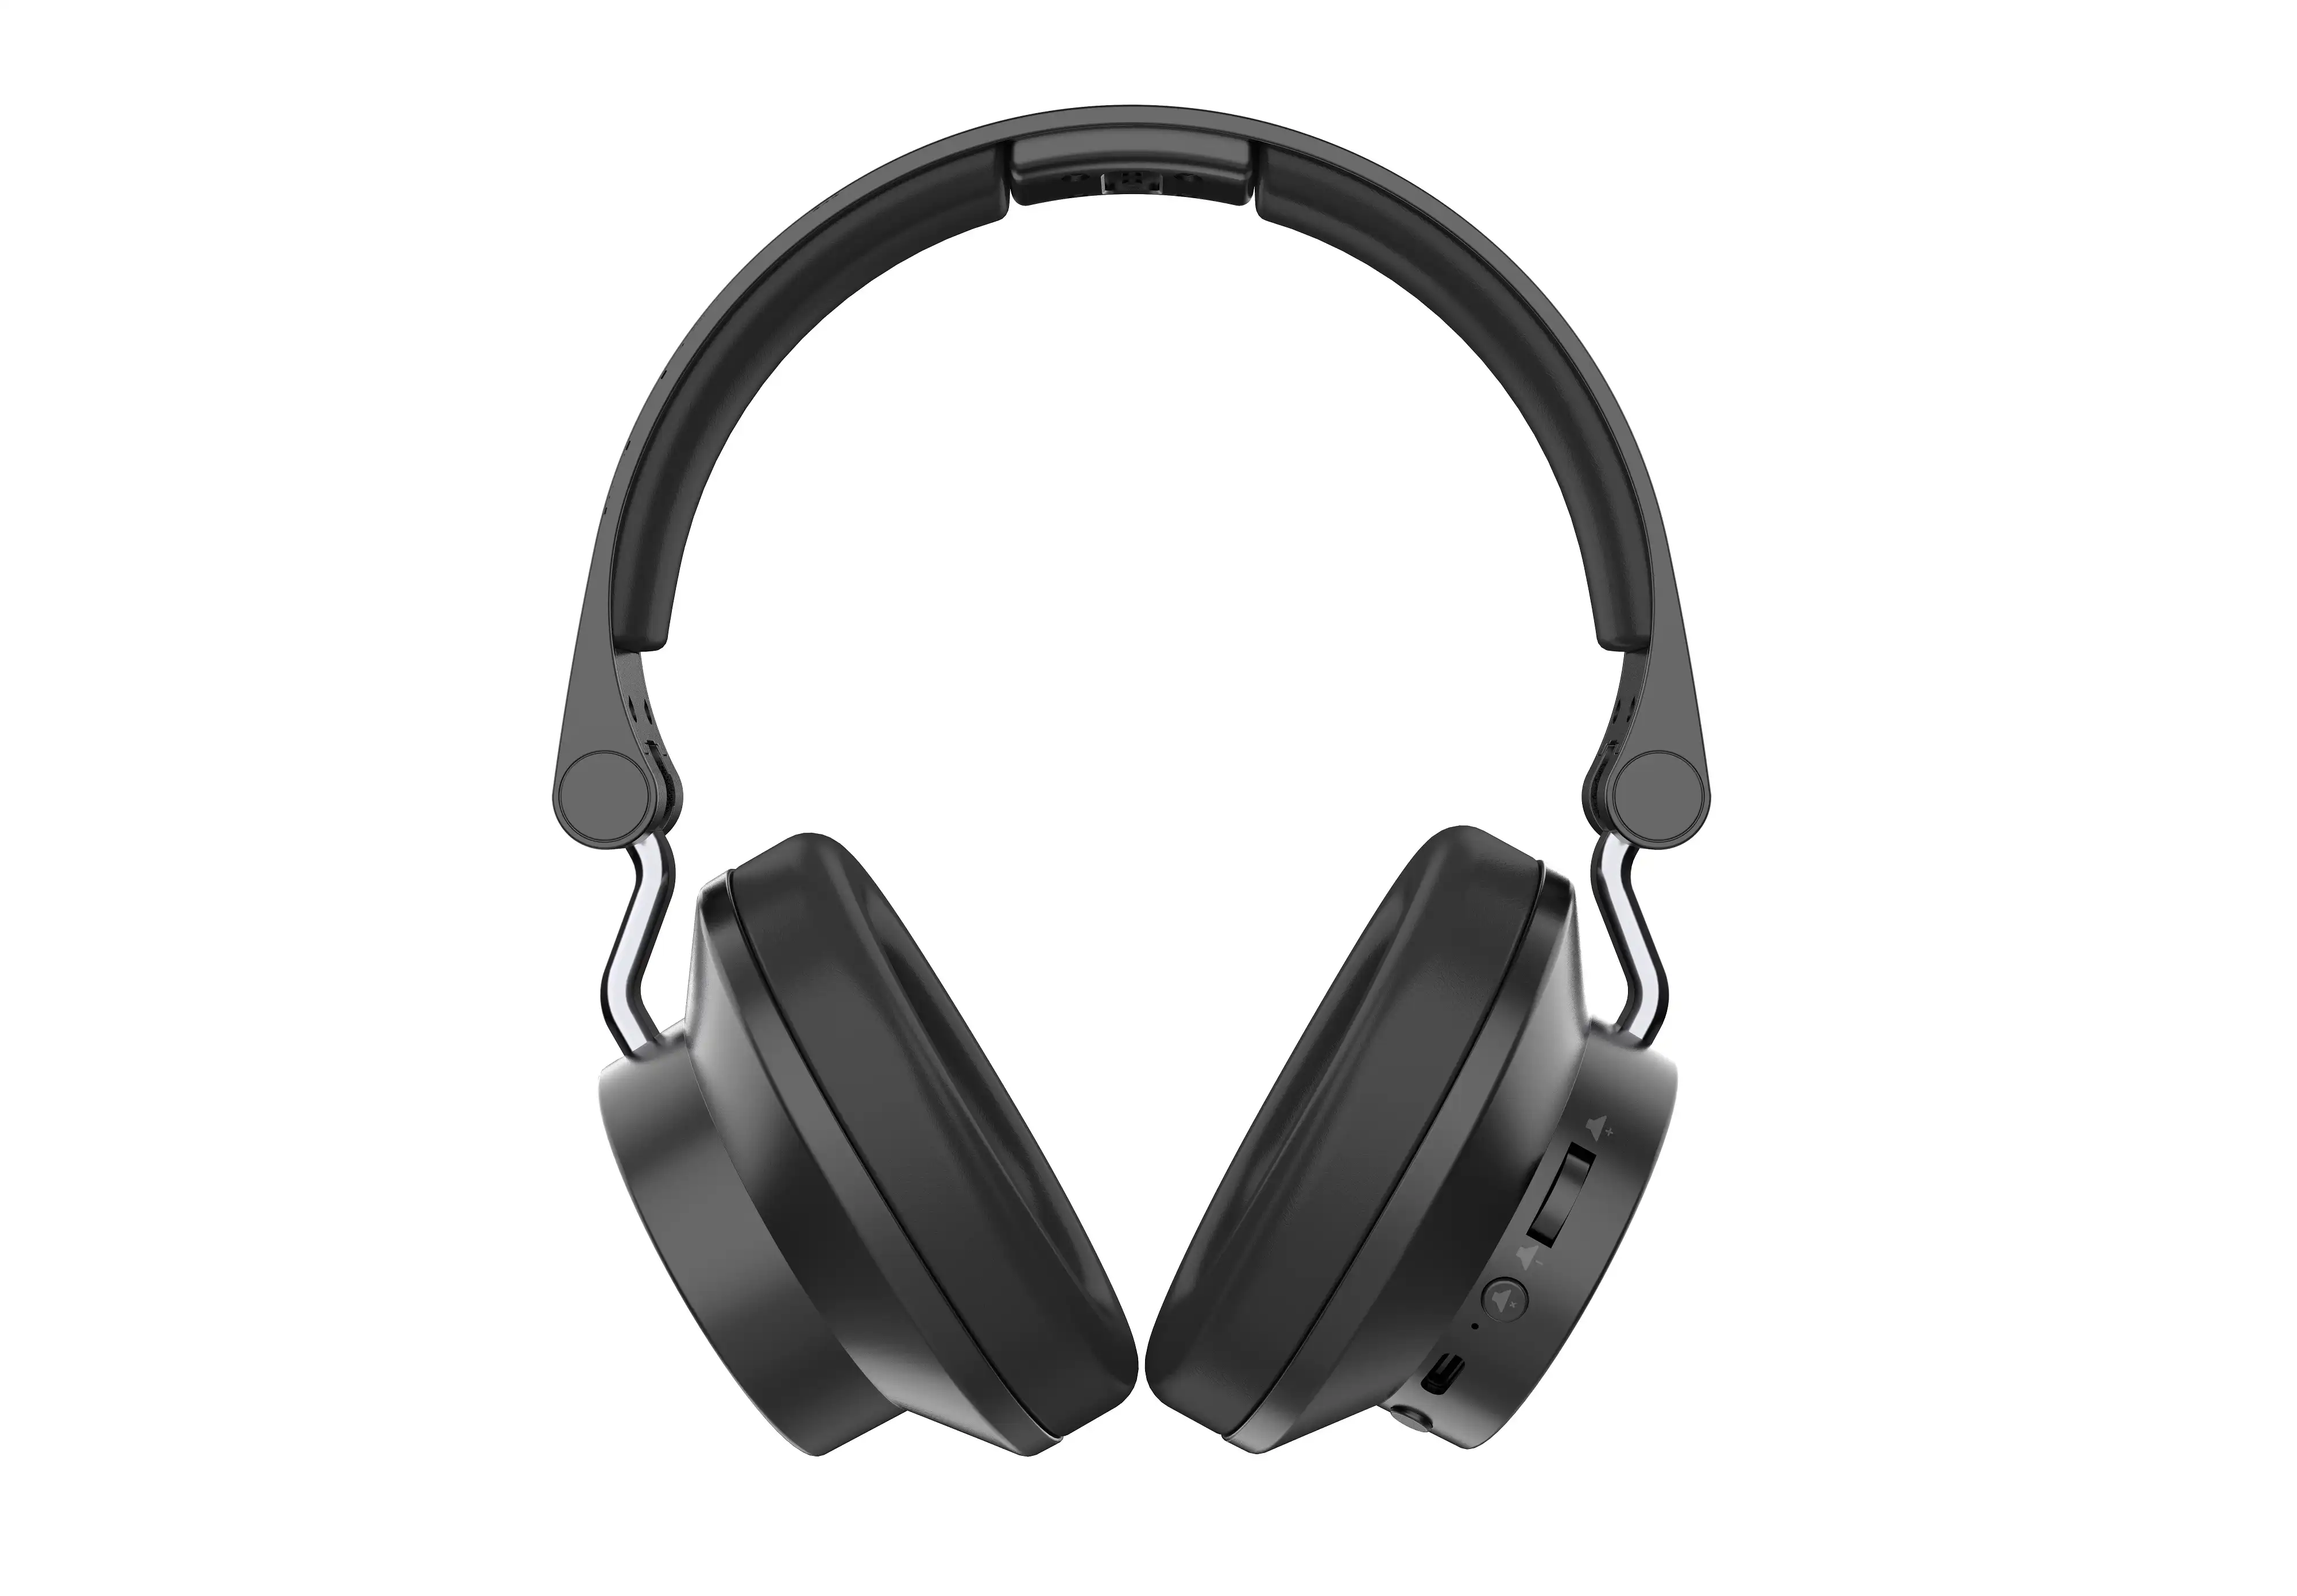 2.4G Drahtlose Kopfhörer über dem Ohr Kopfhörer Faltbares Headset Verstellbarer Kopfhörer mit Mikrofon Für TV-Handy-PC